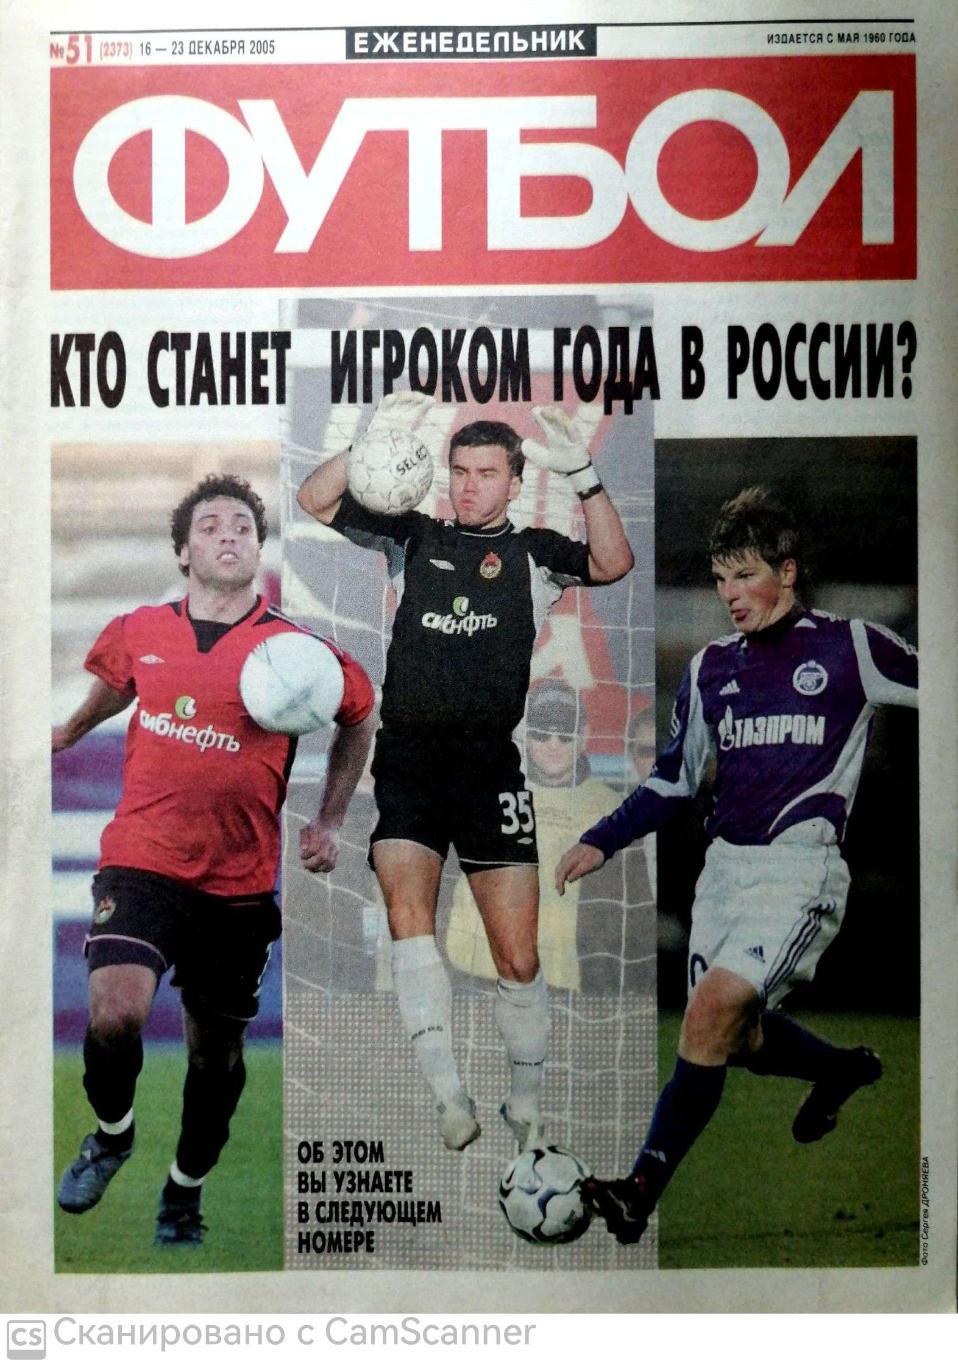 Еженедельник «Футбол» (Москва). 2005 год. №51